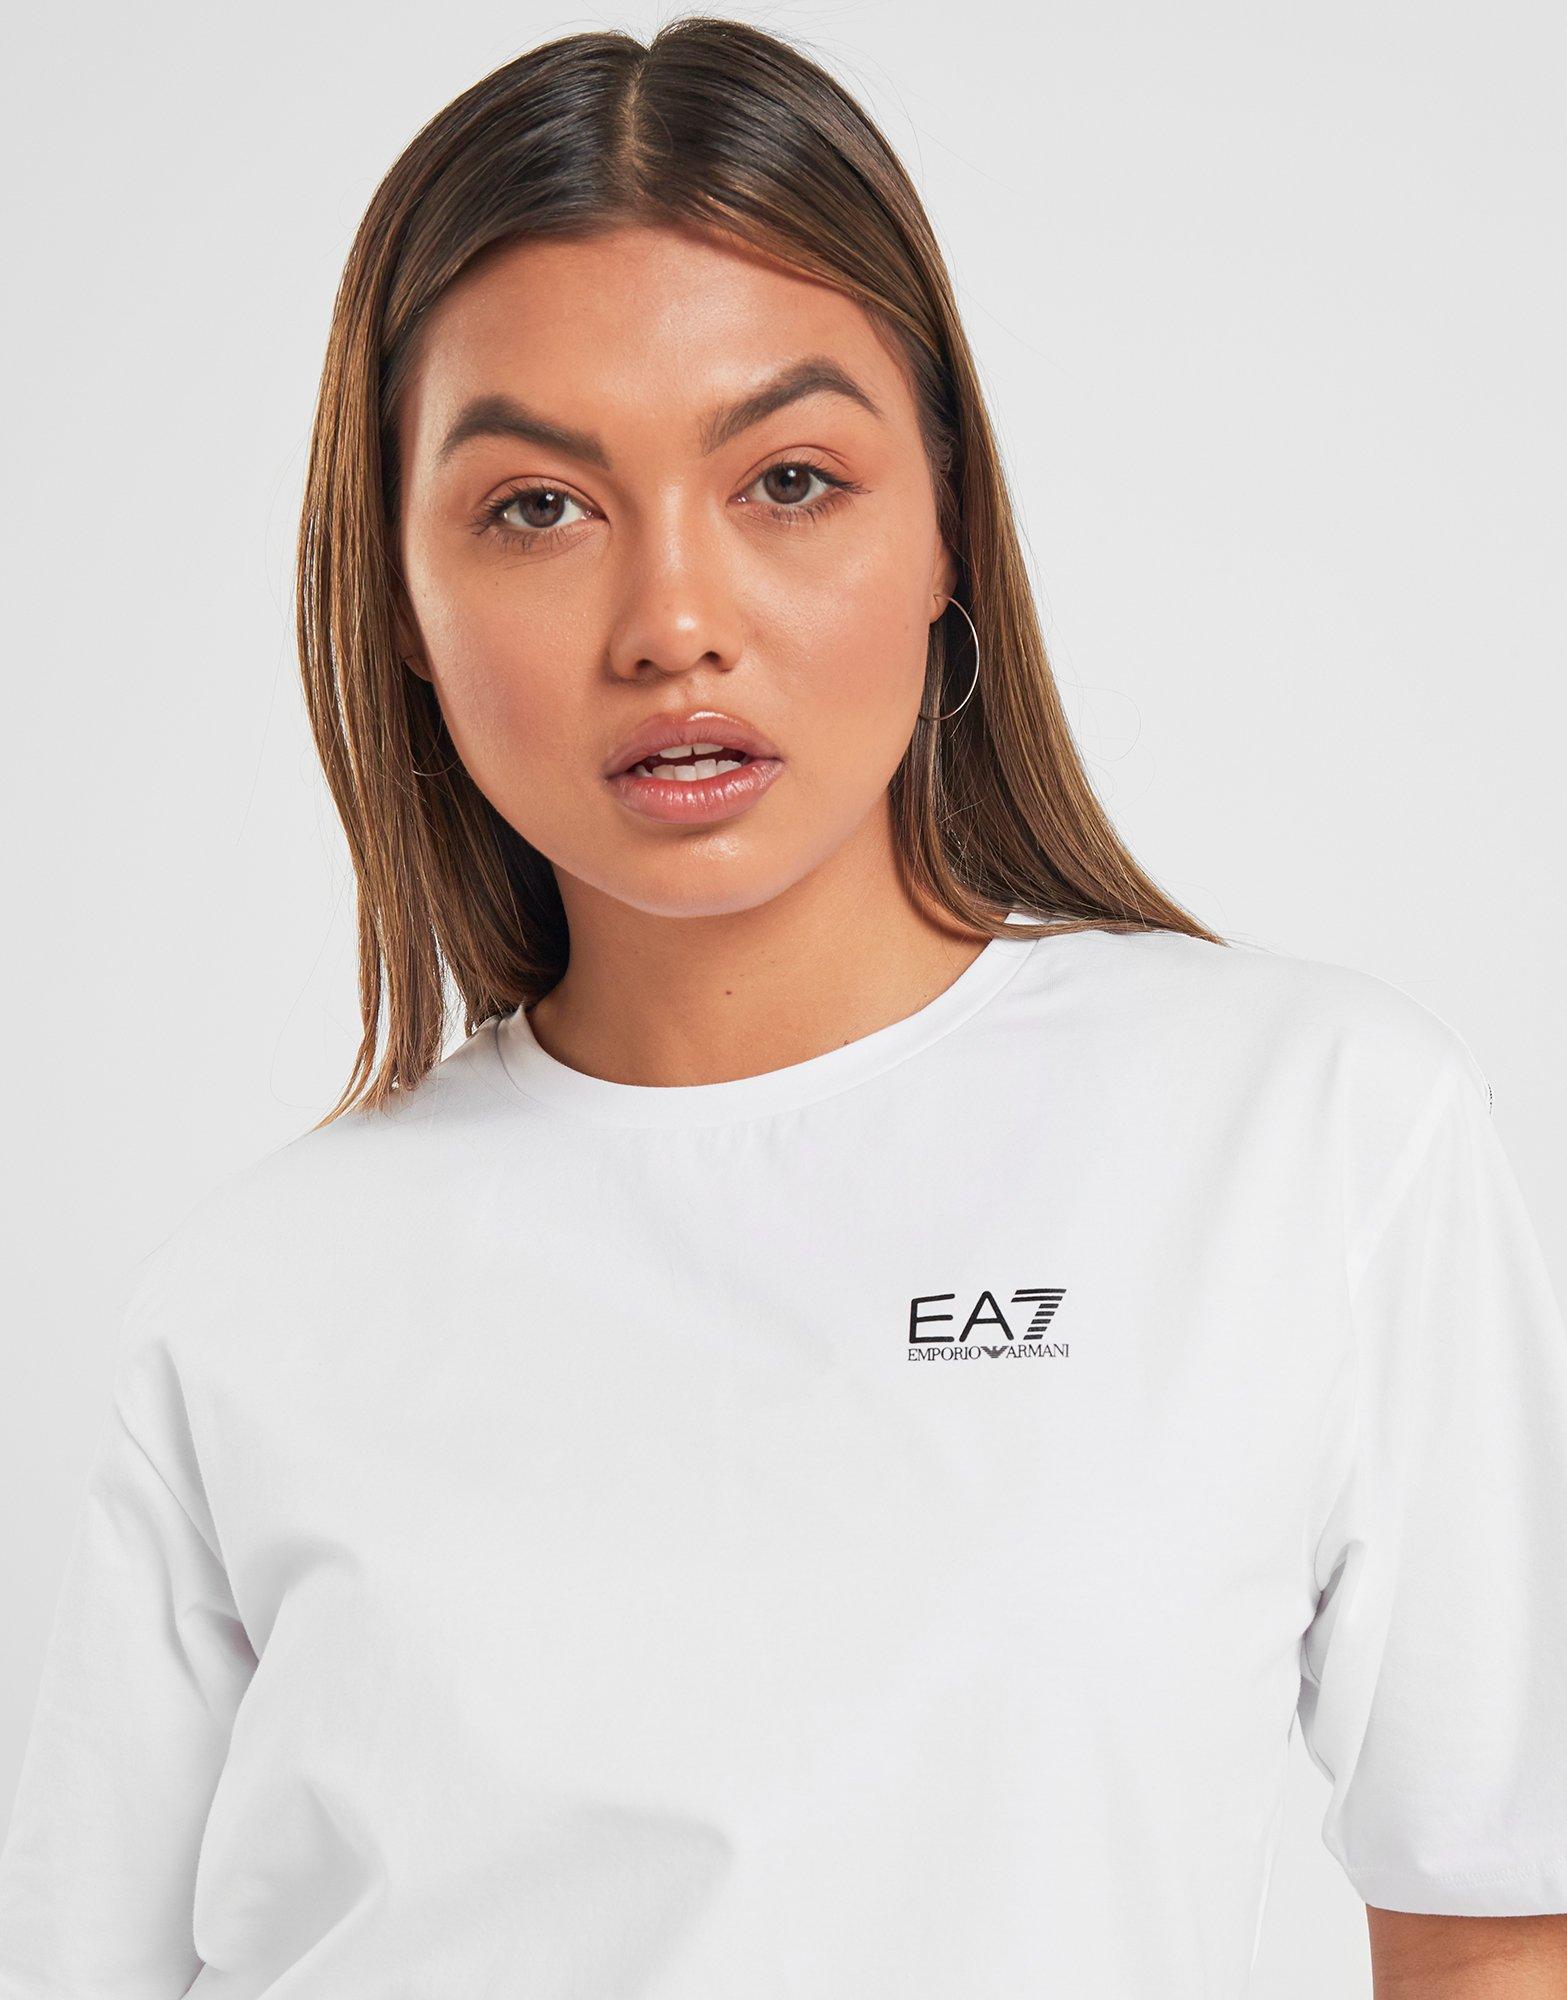 ea7 tape t shirt